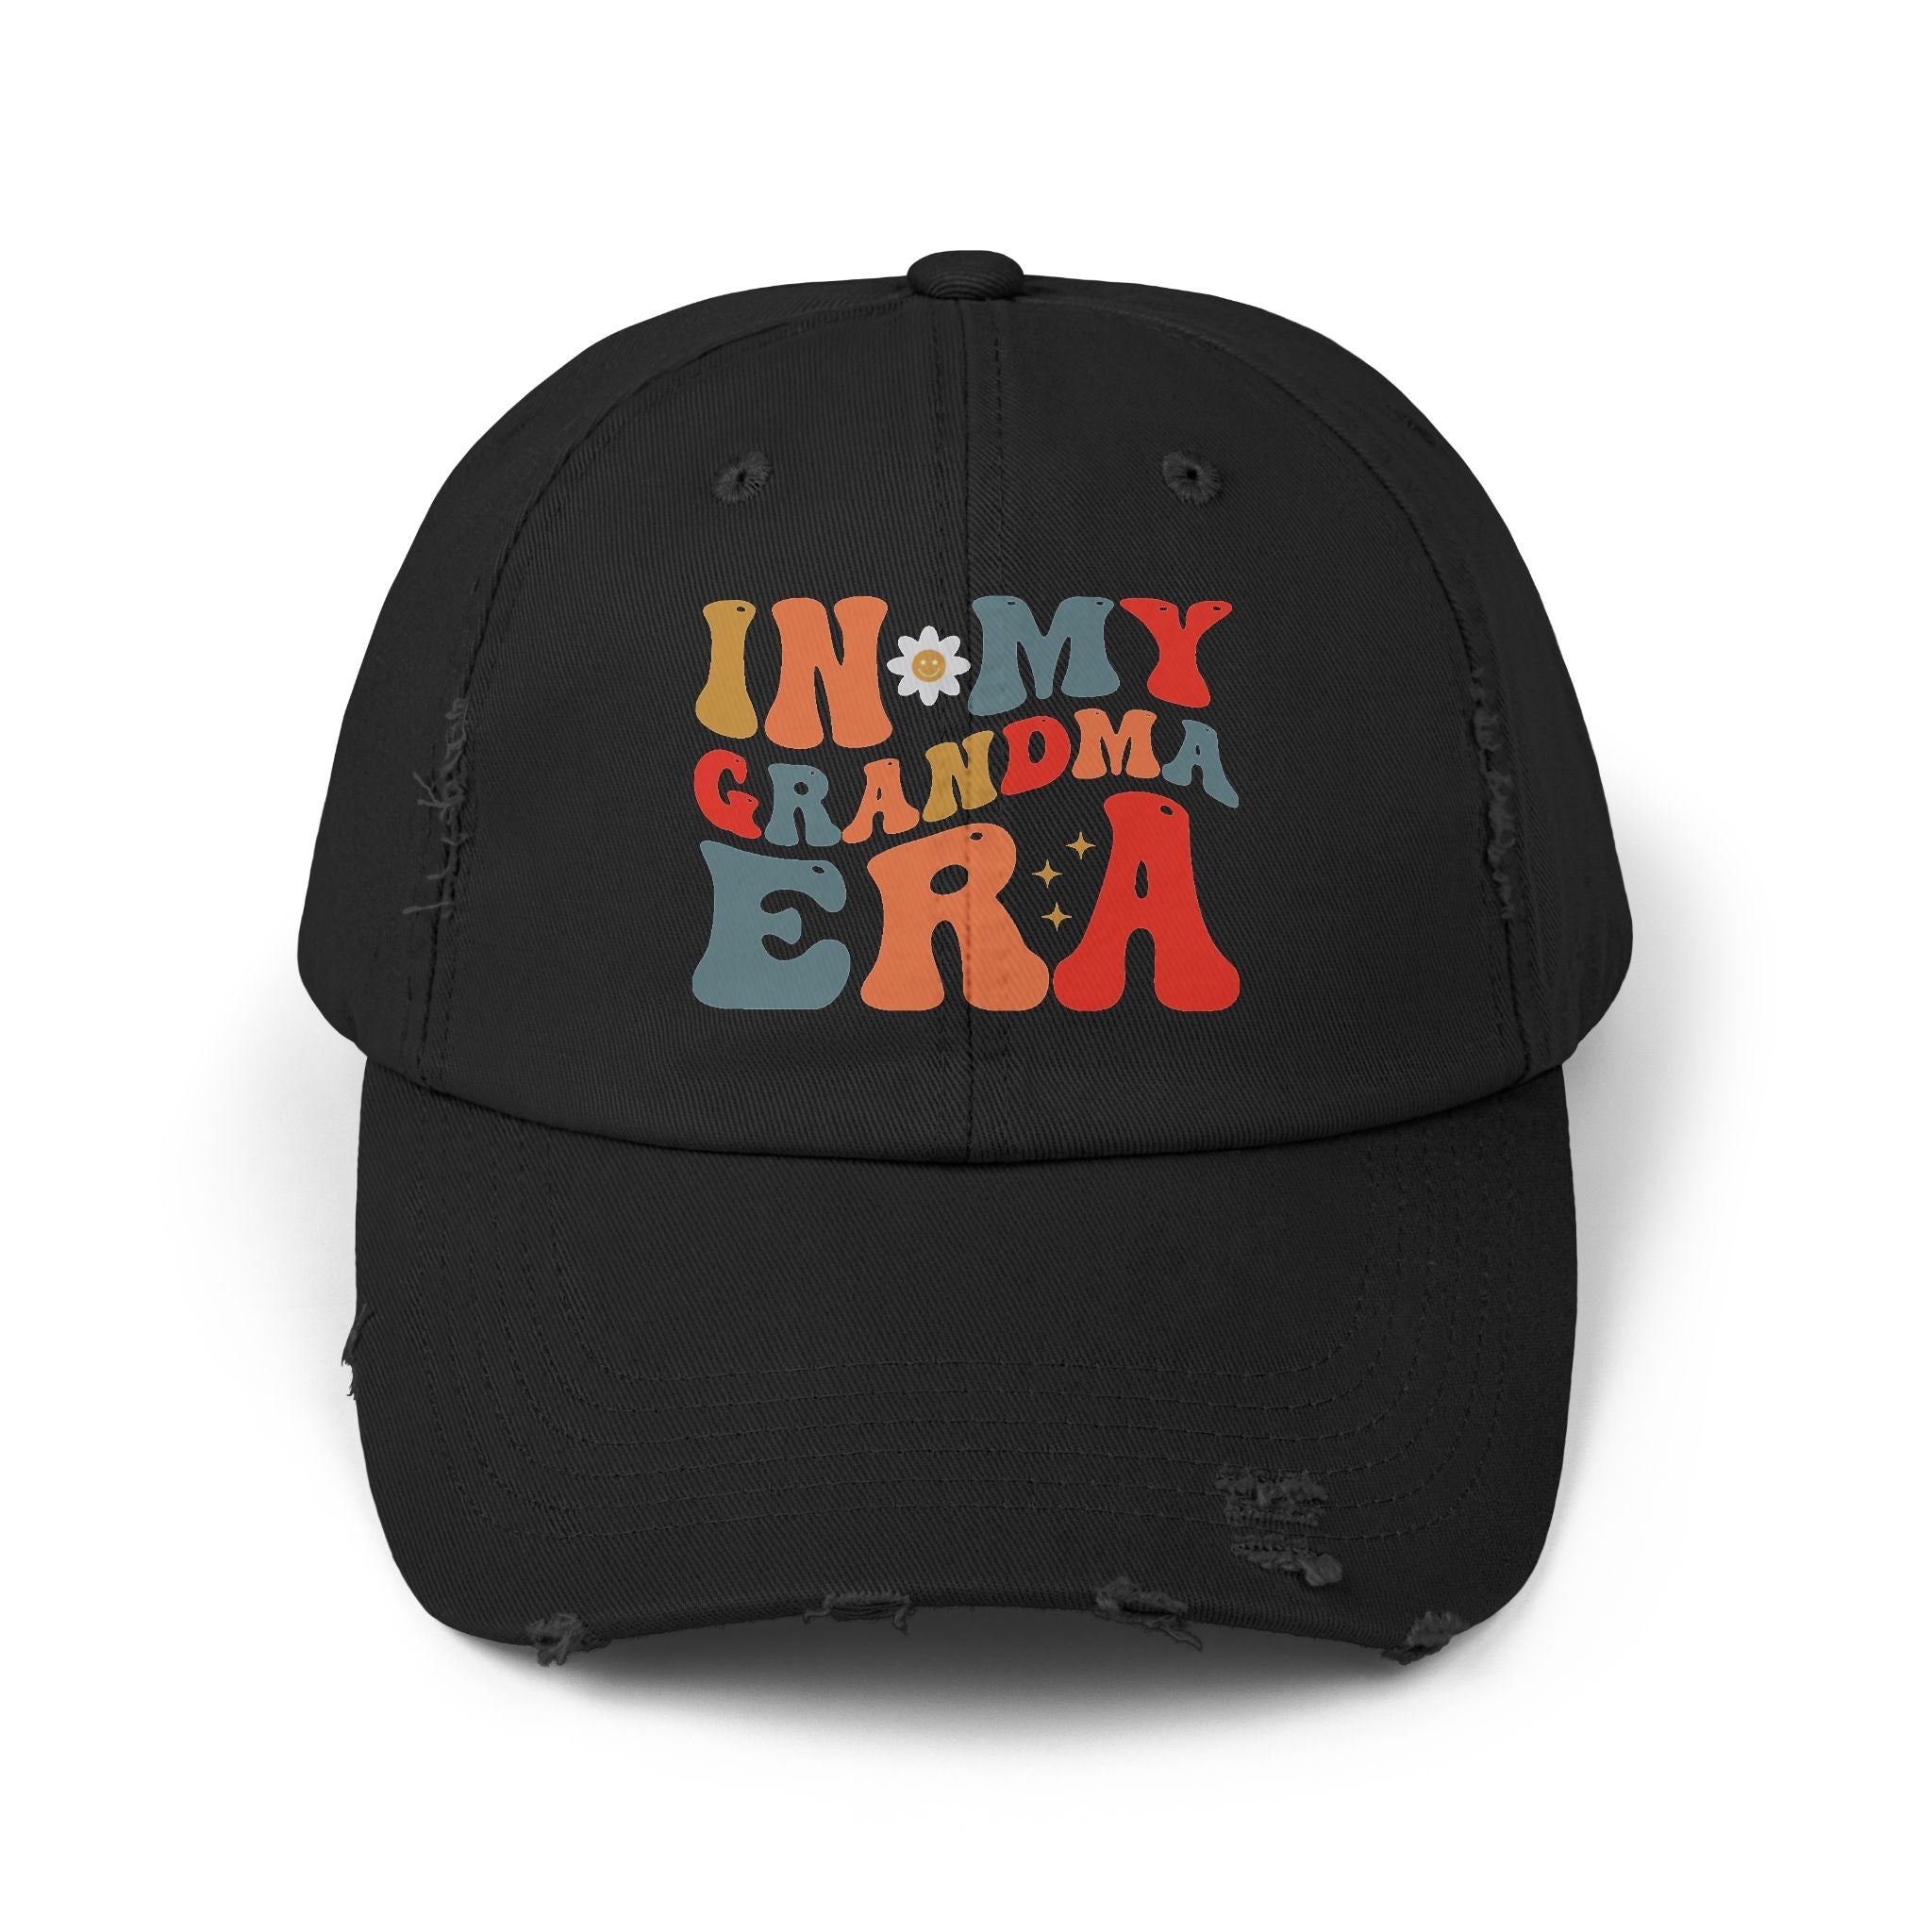 Distressed Cap In My GRANDMA ERA - Black / One size - Hats